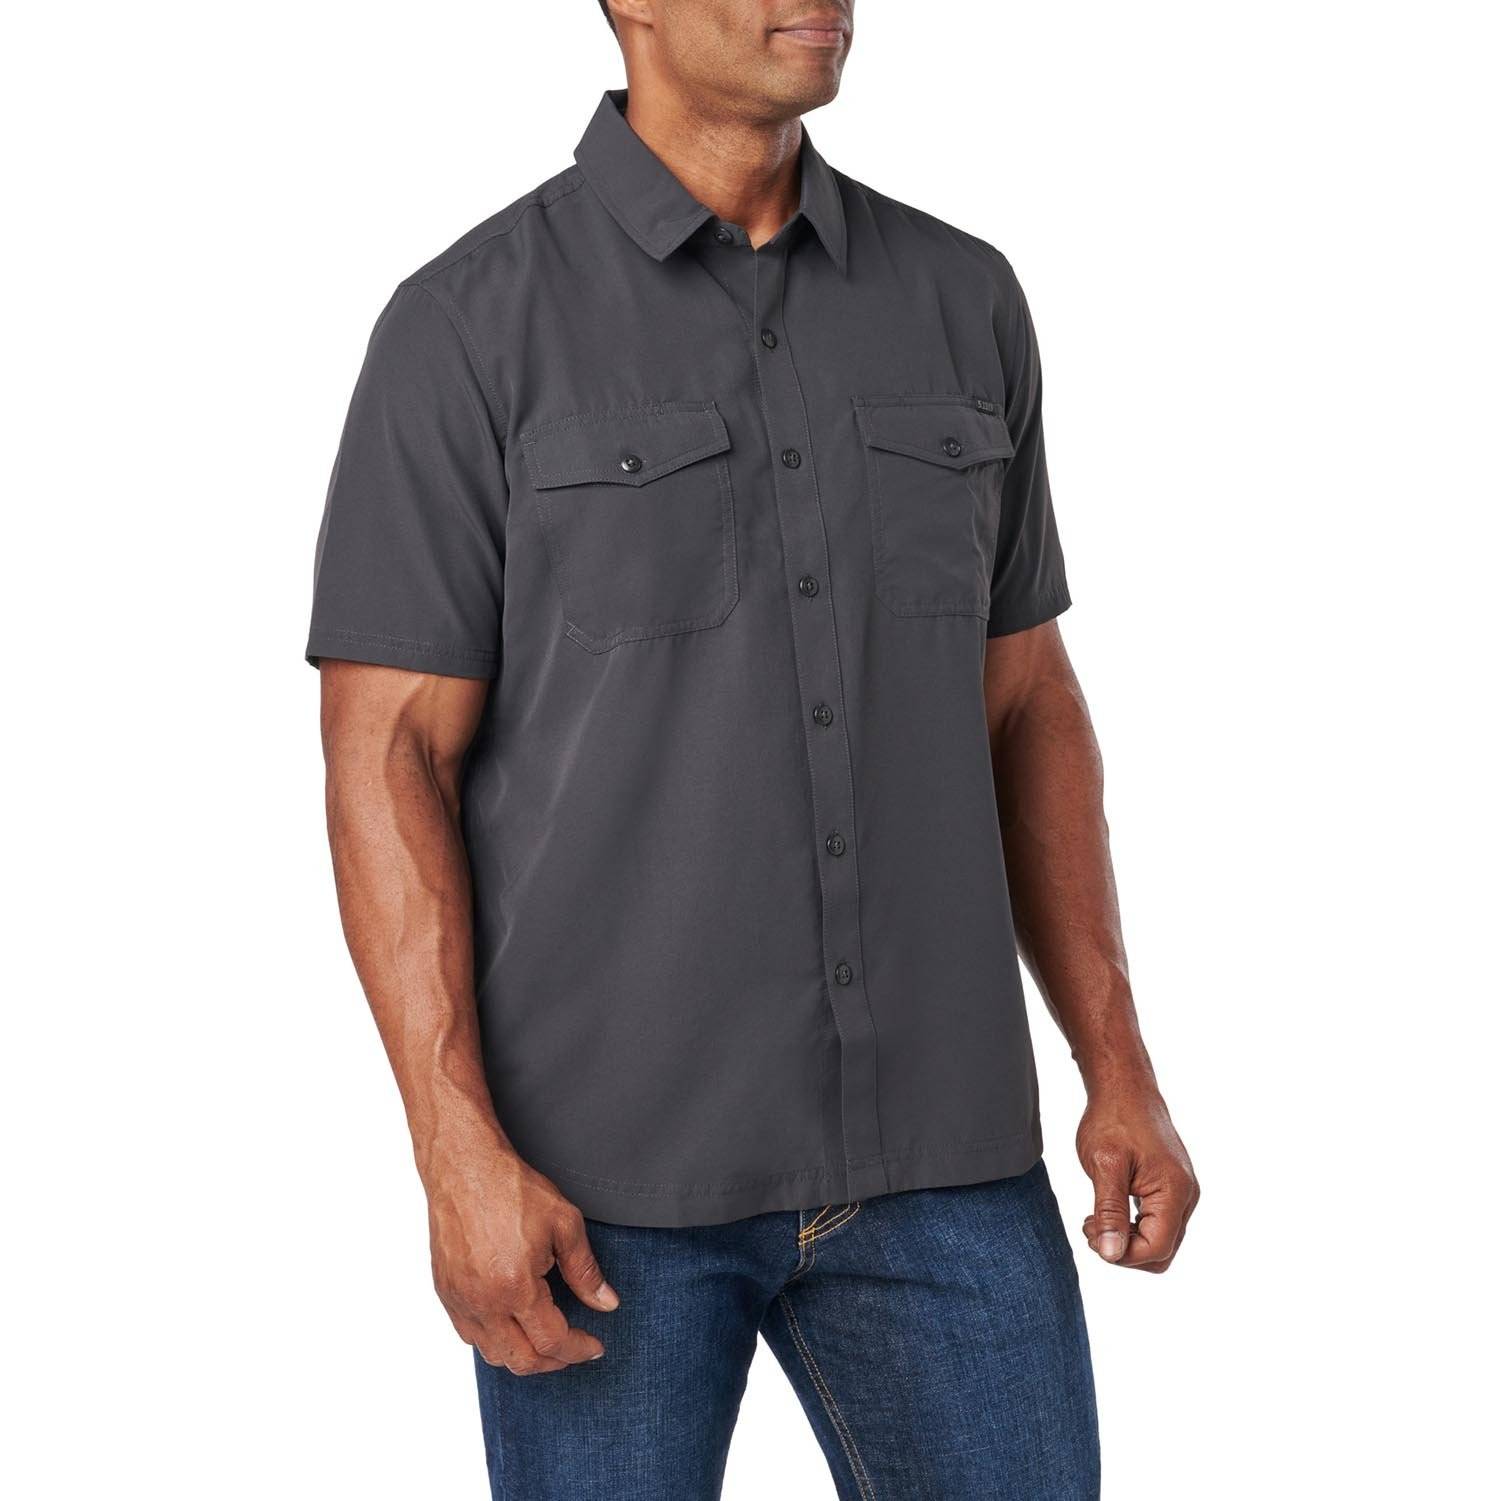 5.11 Tactical Marksman Short Sleeve Shirt